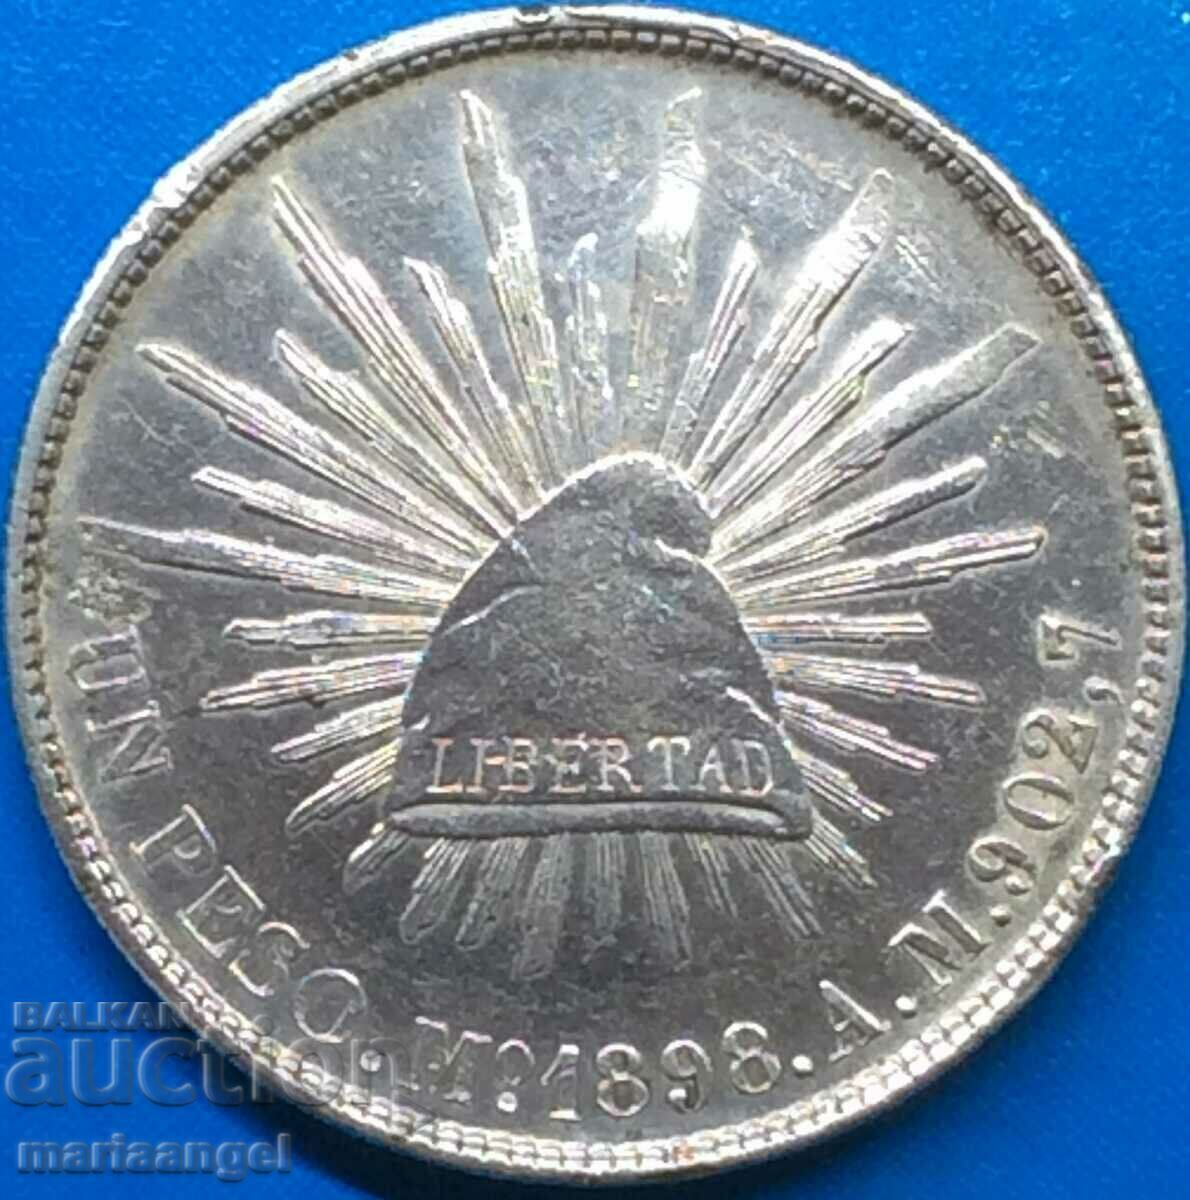 1898 1 peso Mexico 8 reales 25.95g 38mm silver